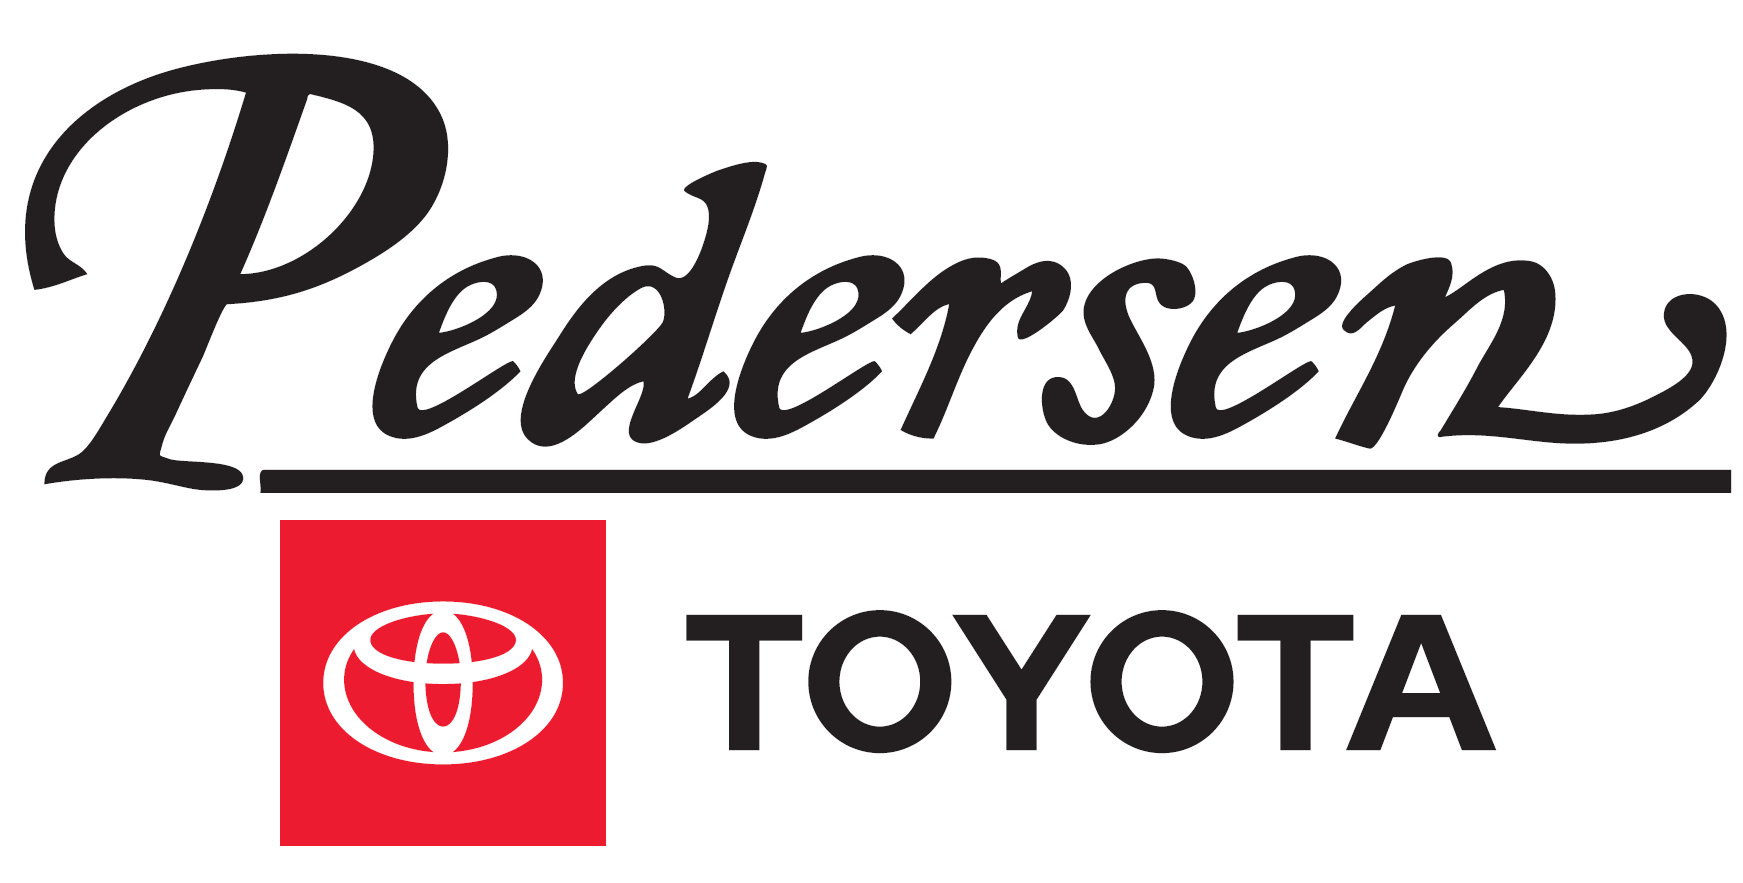 S. Pedersen Toyota (Nivel 4)